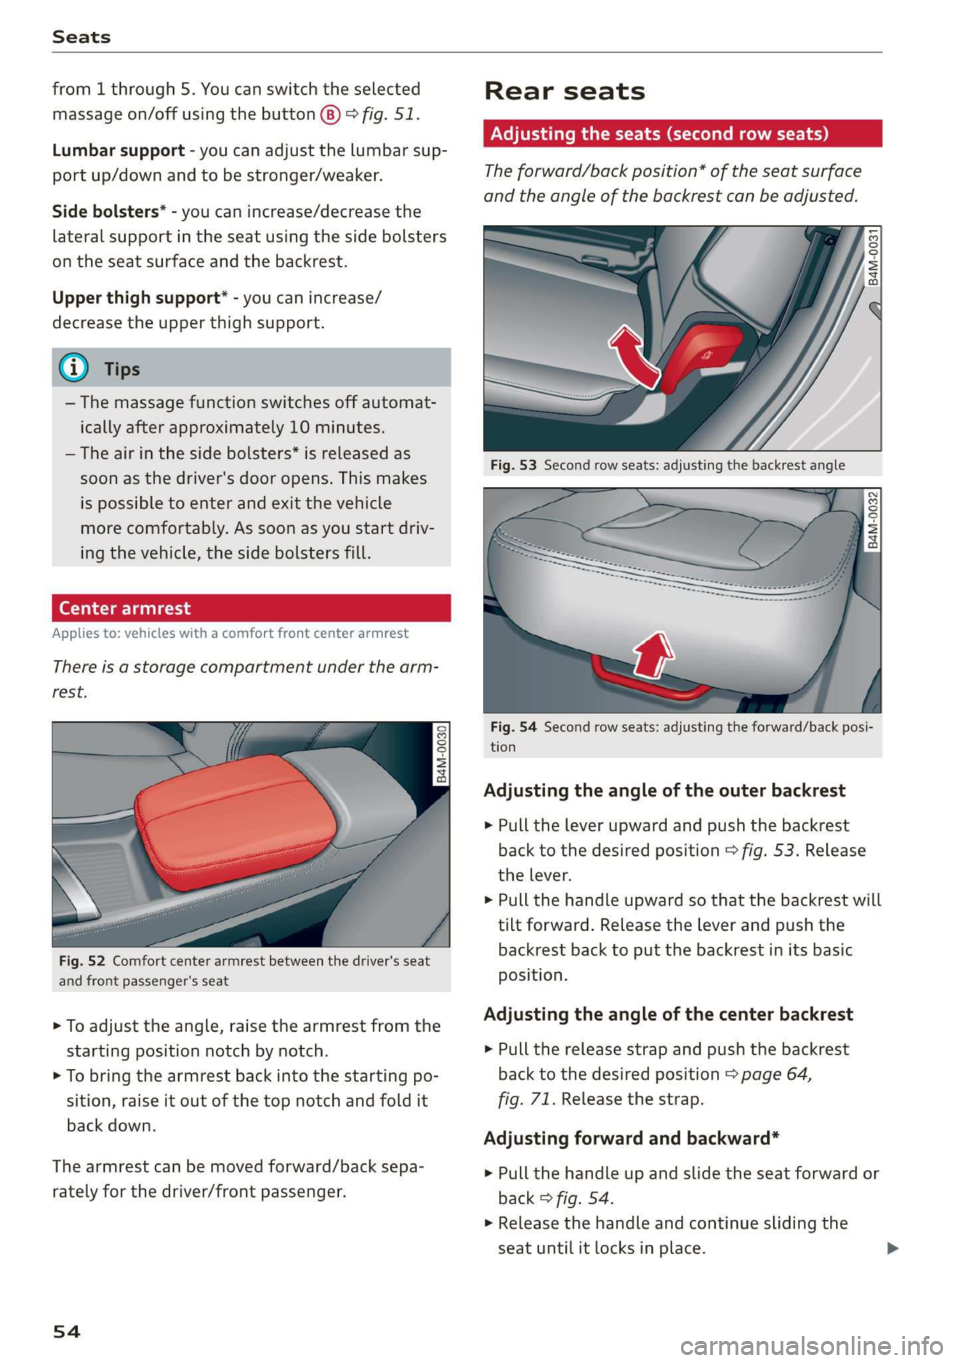 AUDI Q7 2019  Owner´s Manual Seats
 
from1through5.Youcanswitchtheselected
massageon/offusingthebutton(8)>fig.51.
Lumbarsupport-youcanadjustthelumbarsup-
portup/downandtobestronger/weaker.
Sidebolsters*-youcanincrease/decreasethe